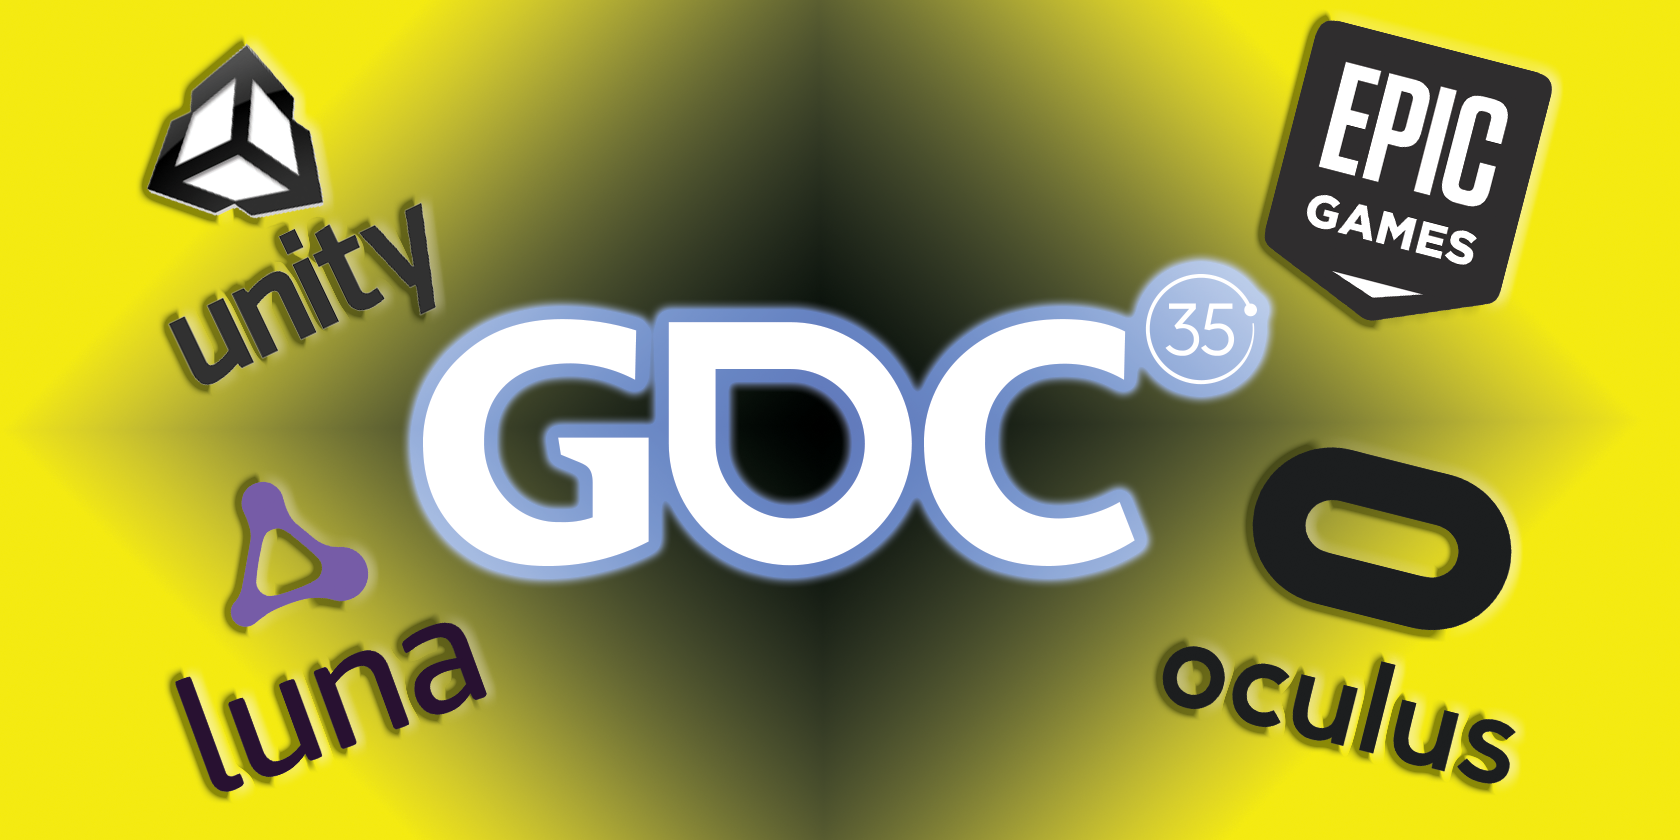 gdc 2021 logo with unity, epic, luna, and oculus logos